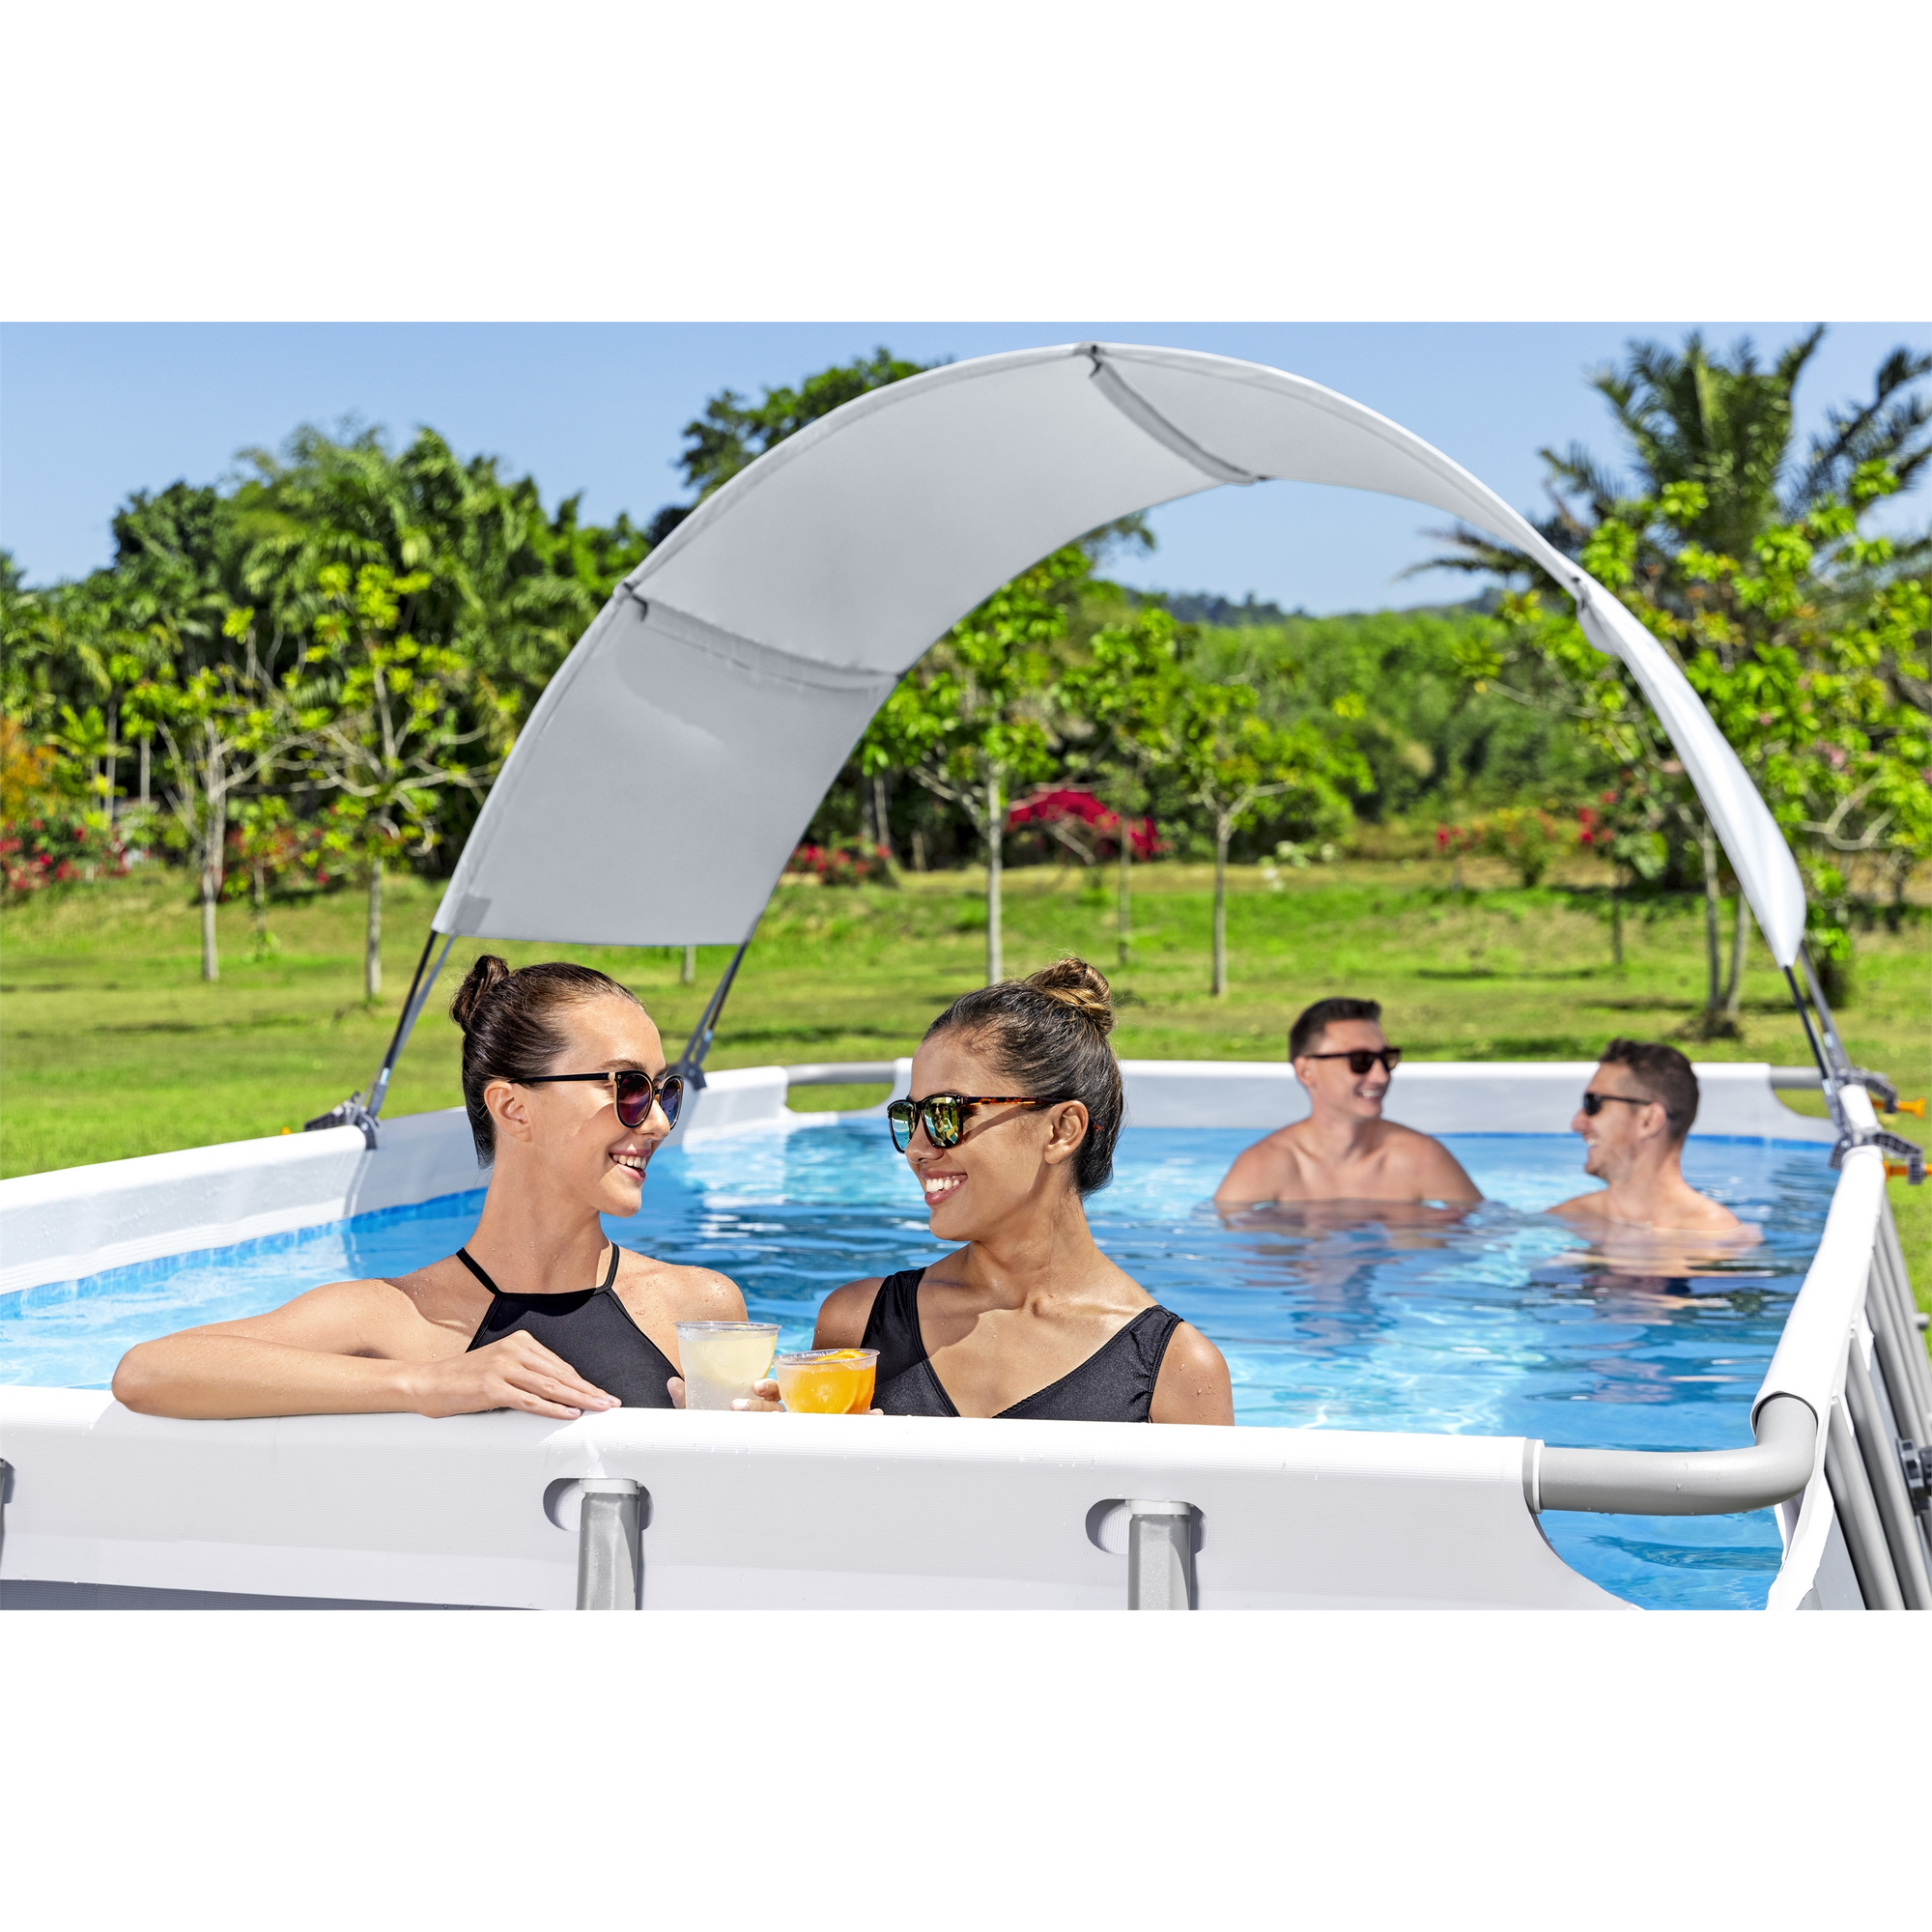 Sonnenschutzdach 'Flowclear' grau 86 x 20 cm für eckige und ovale Pools + product picture